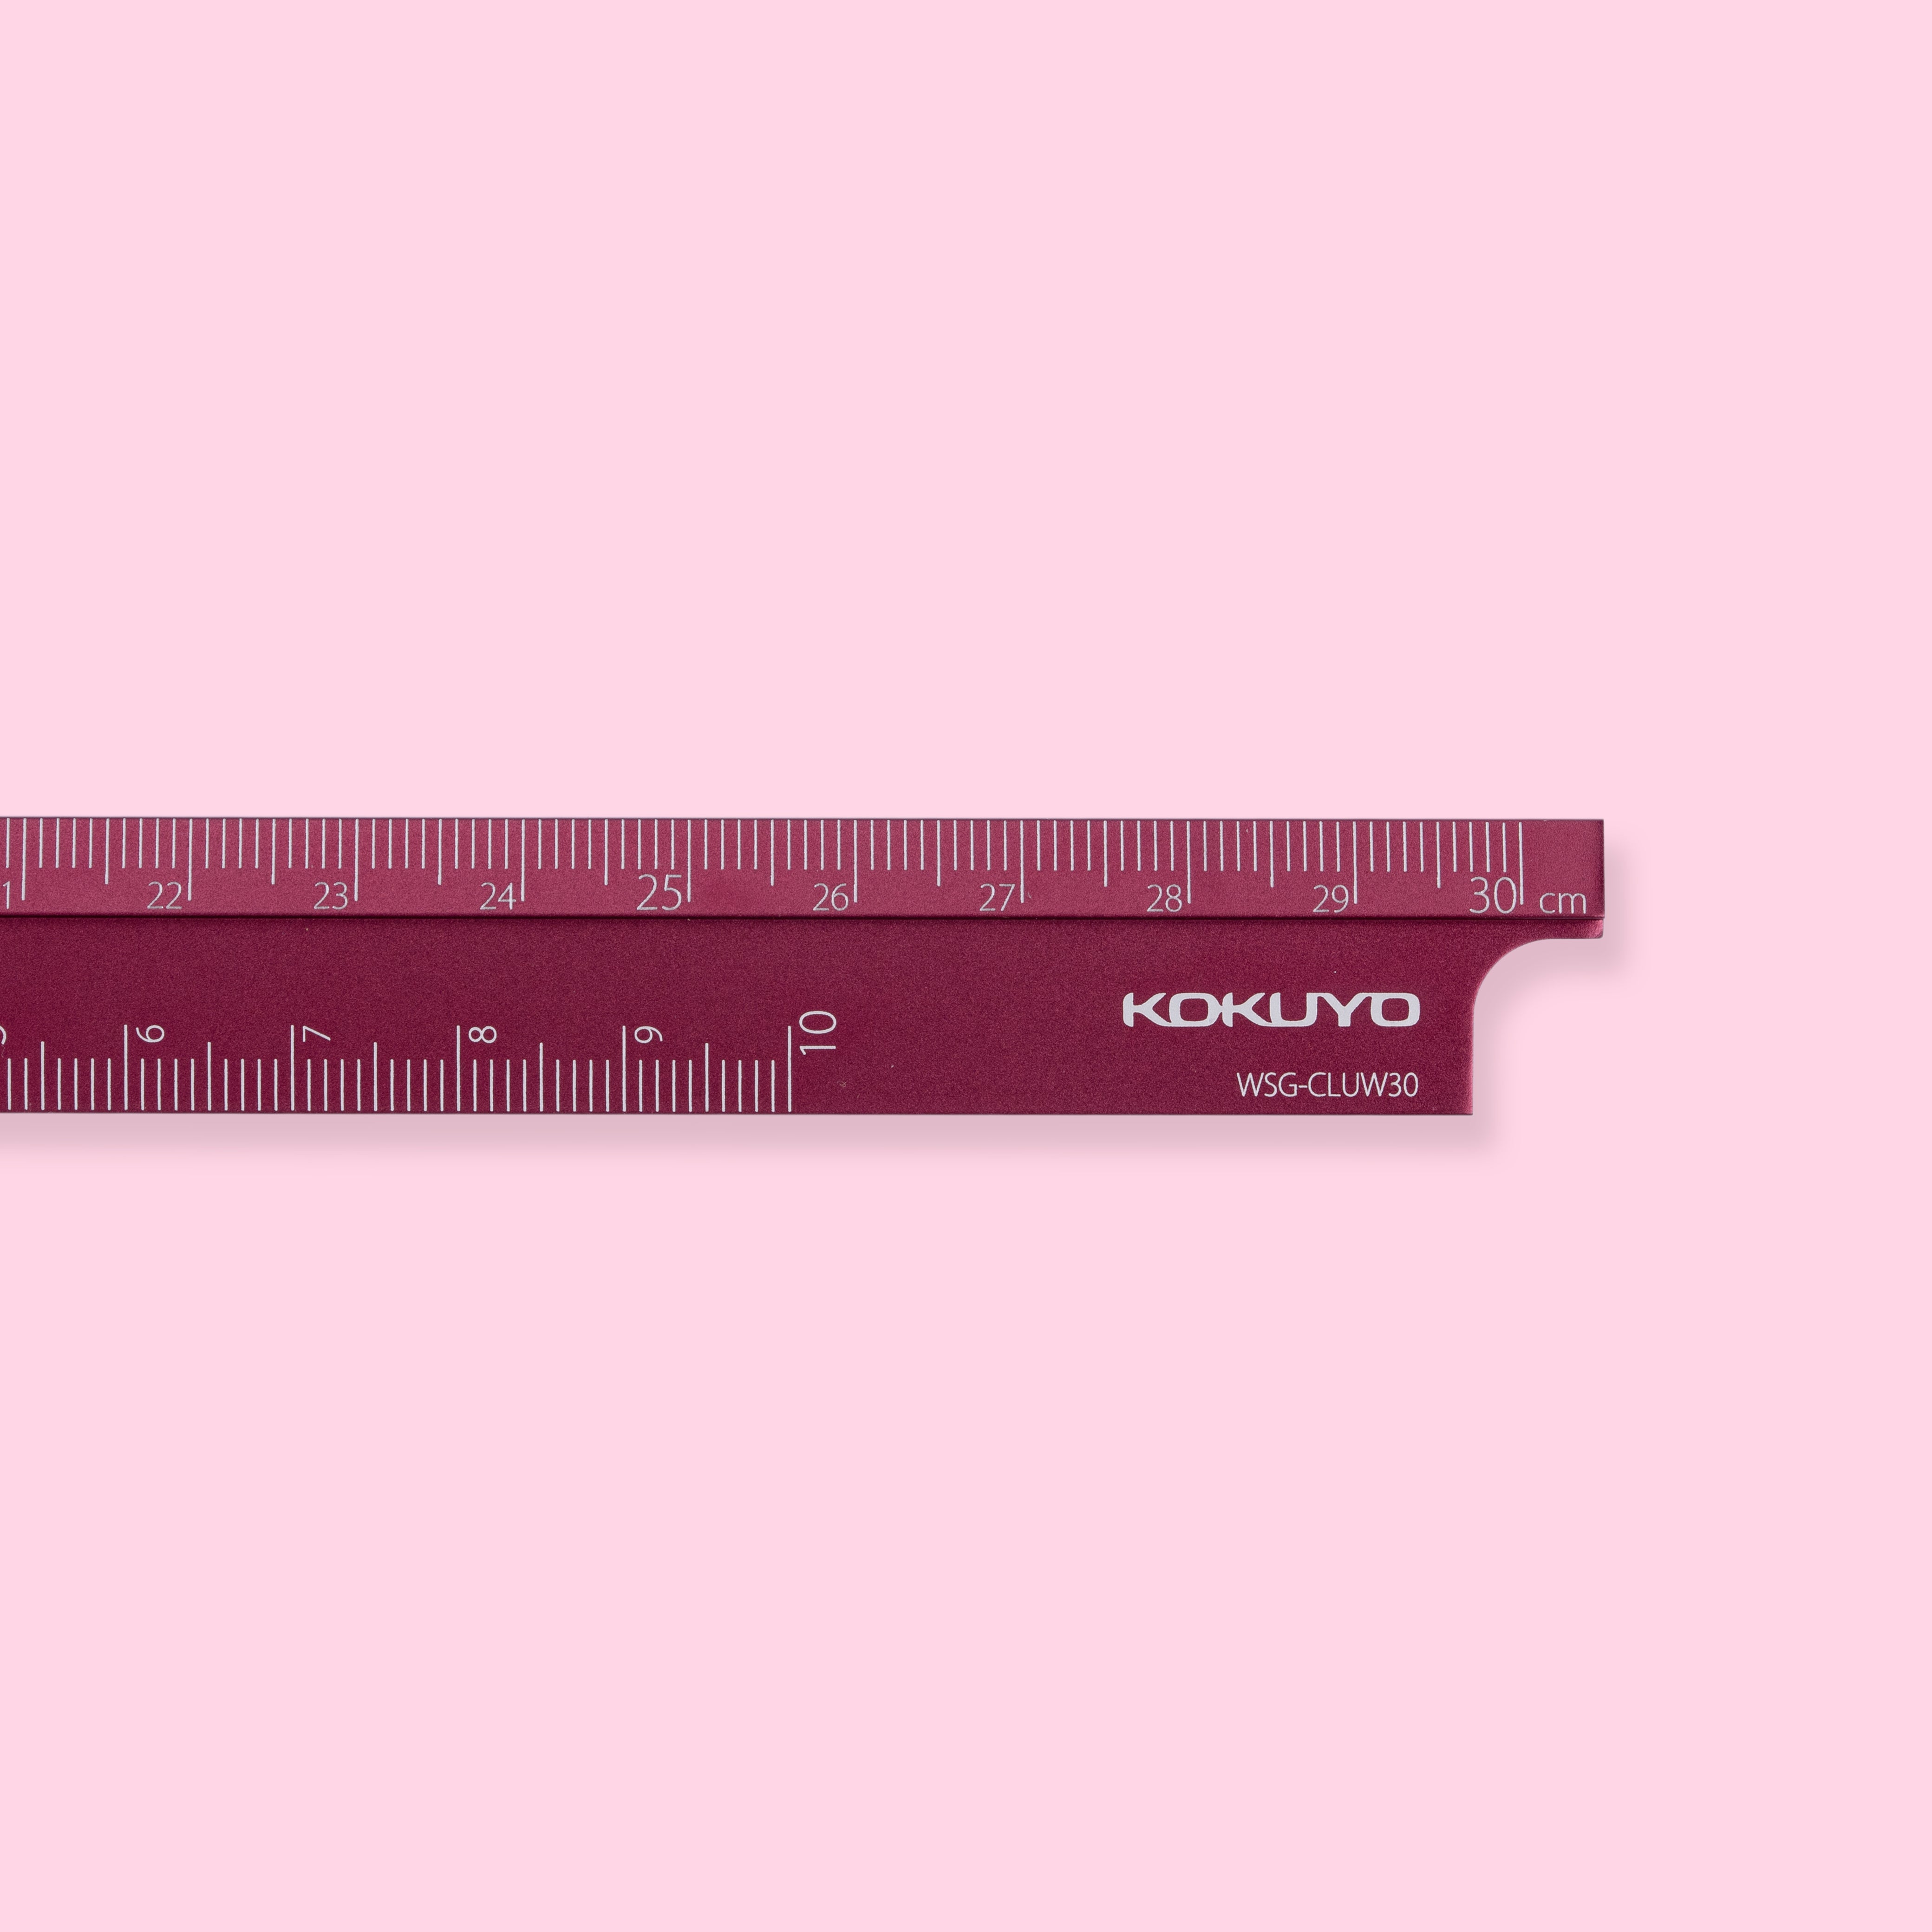 30cm Multi-Angle Ruler, Pink